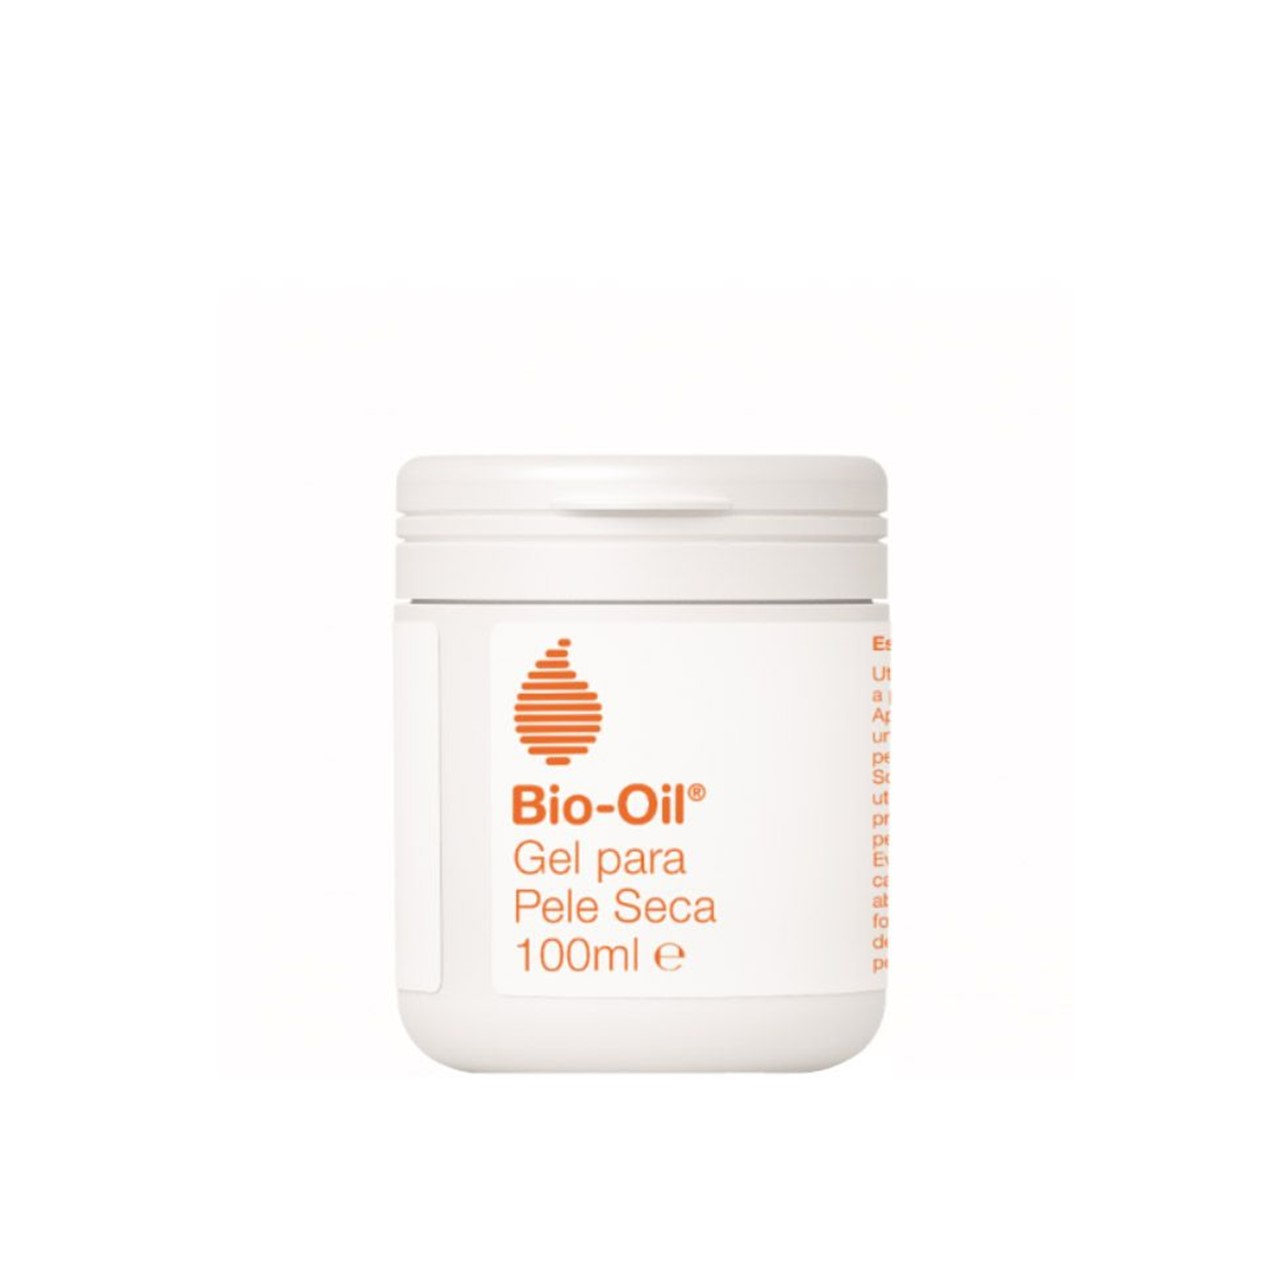 Bio-Oil Dry Skin Gel 100ml (3.38fl oz)